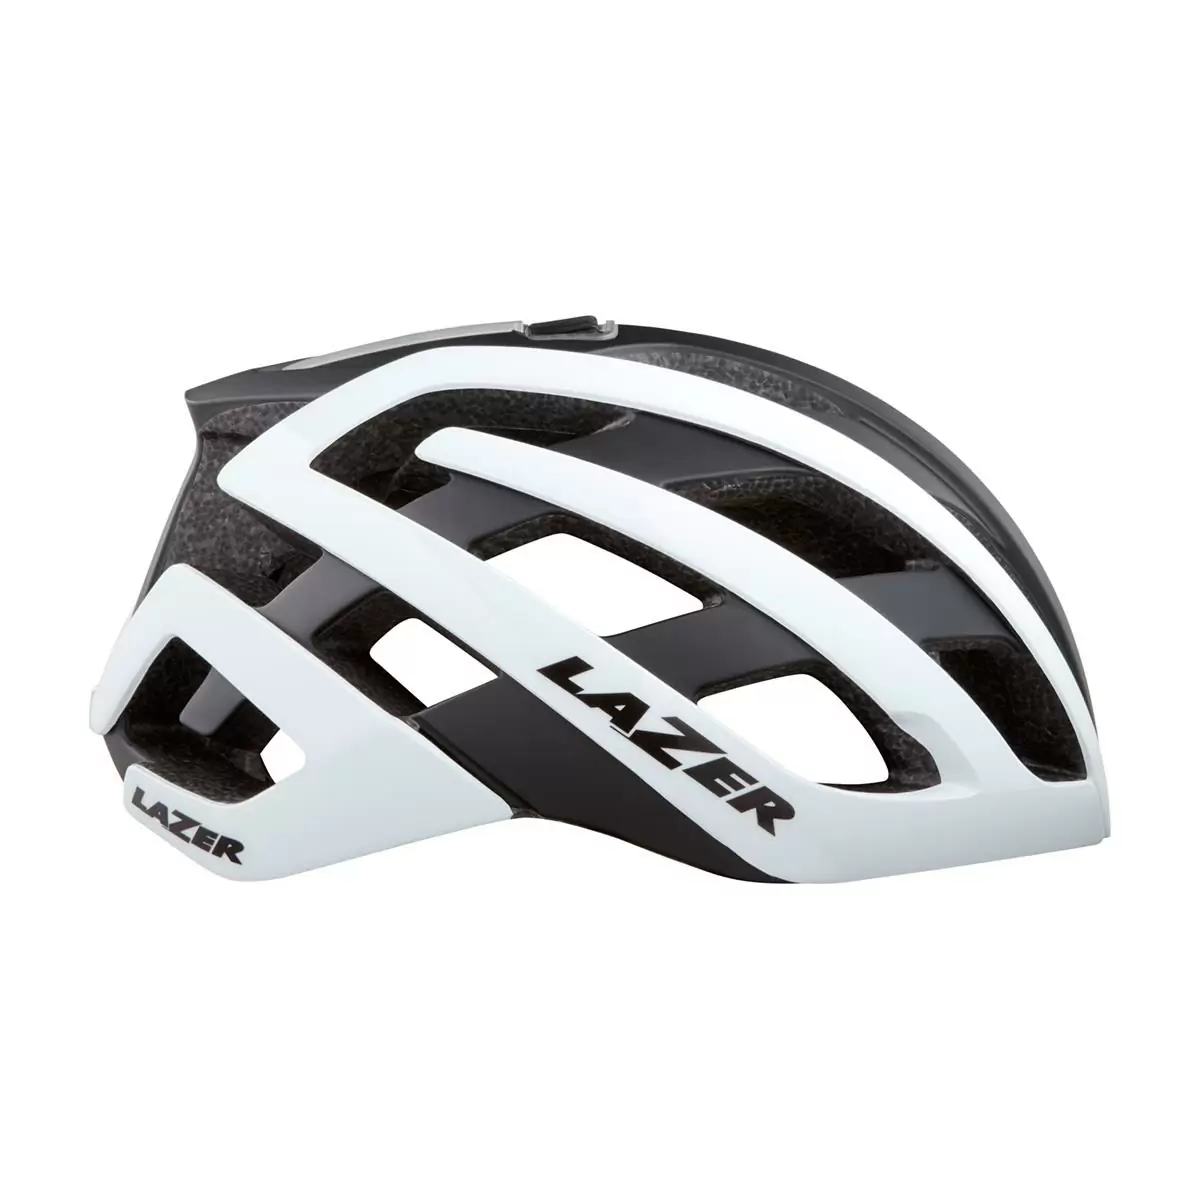 Ultralight helmet Genesis MIPS white size S (52-56) - image